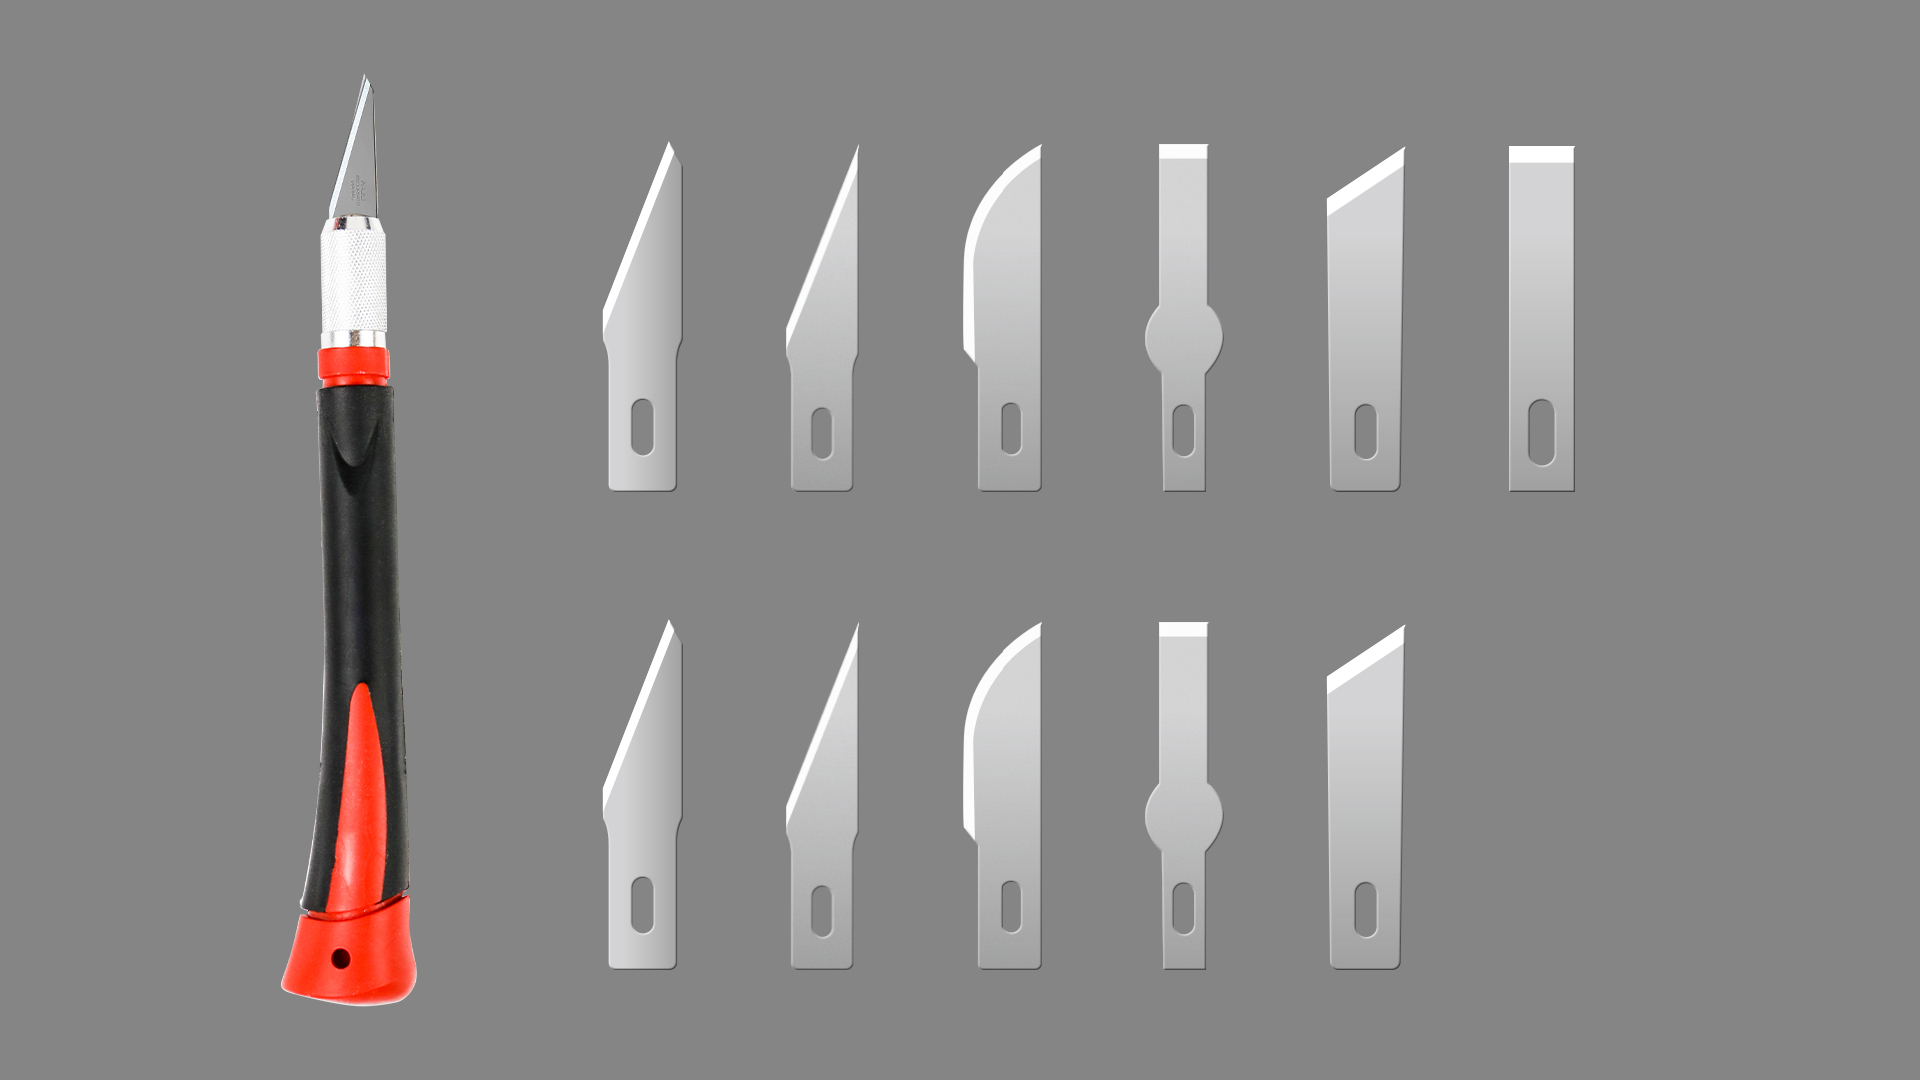 Hobby Knife Blades